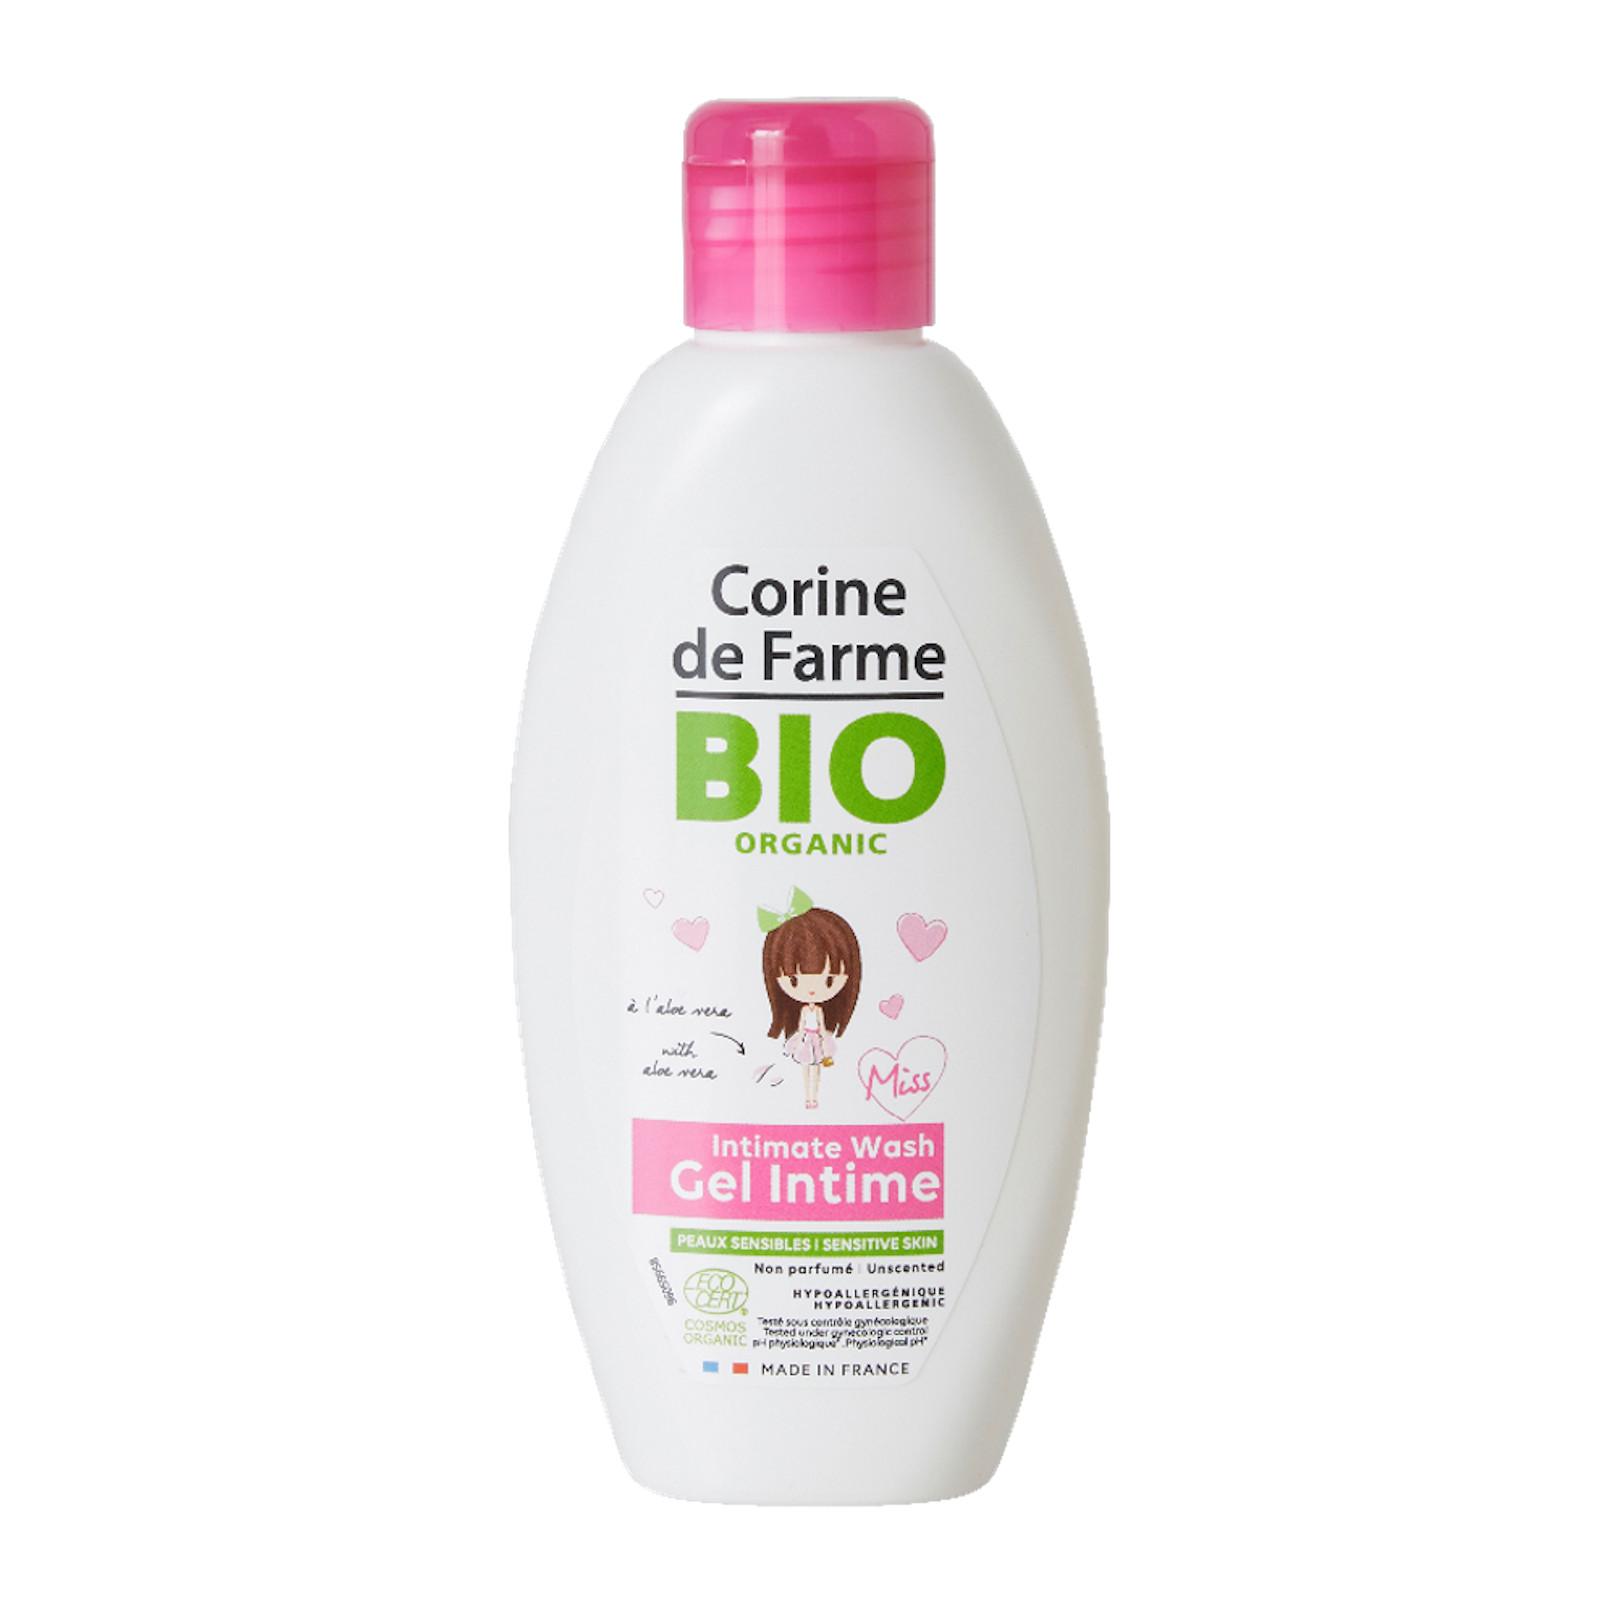 Corine de Farme Intimní gel pro dívky 125 ml